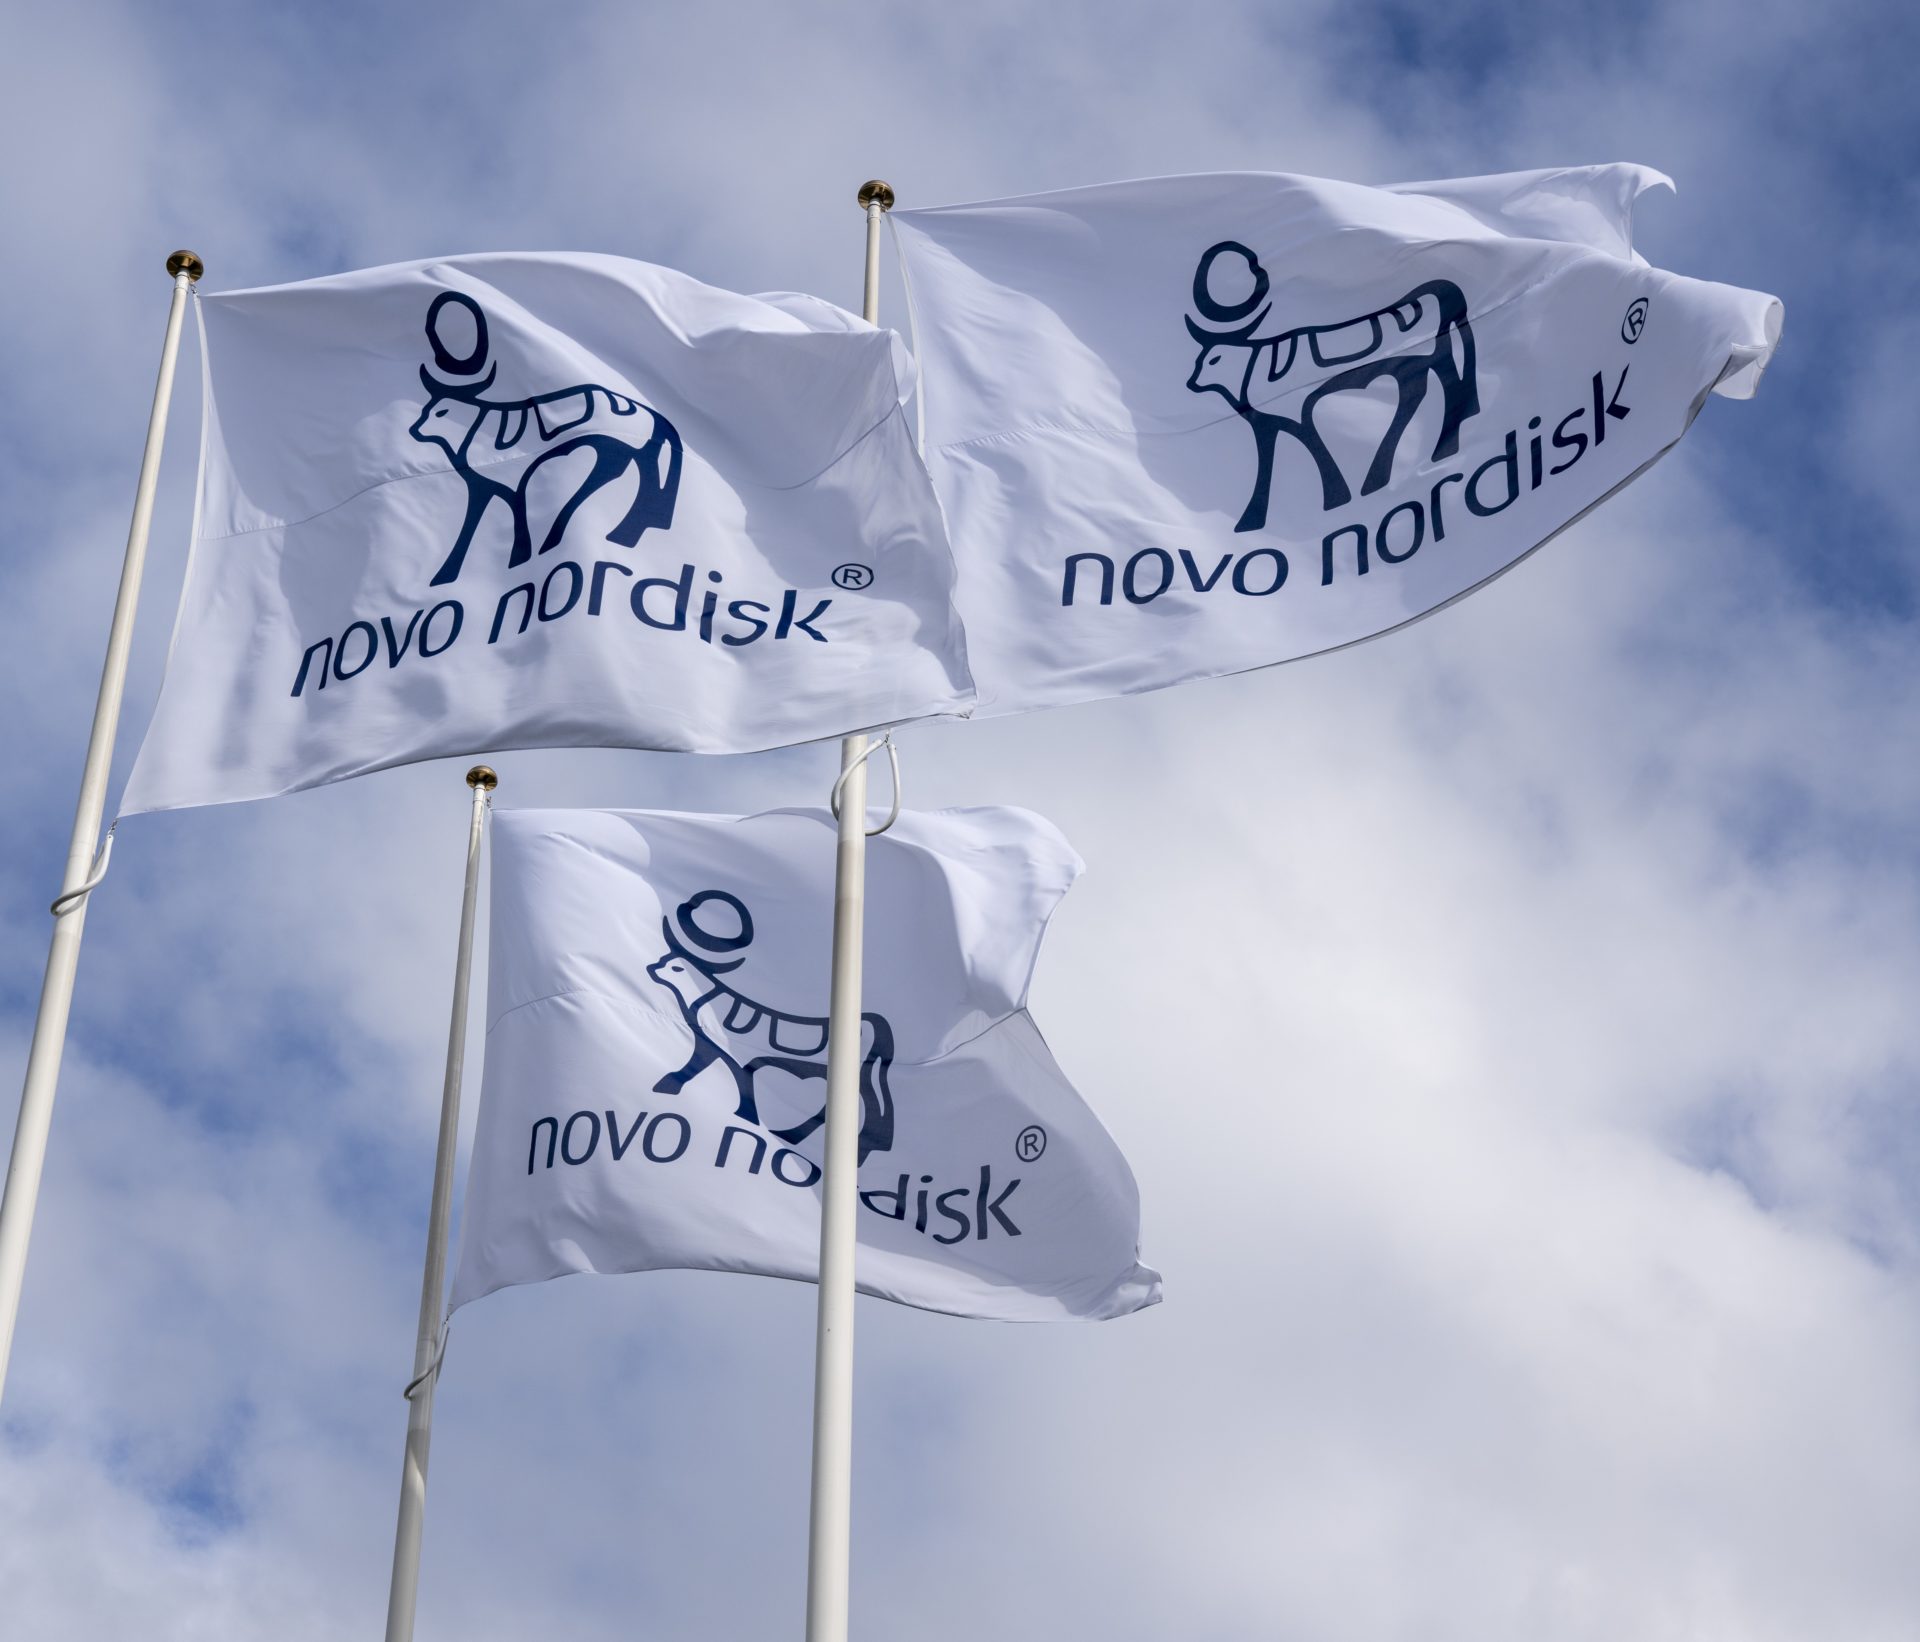 Novo Nordisk logo on flags